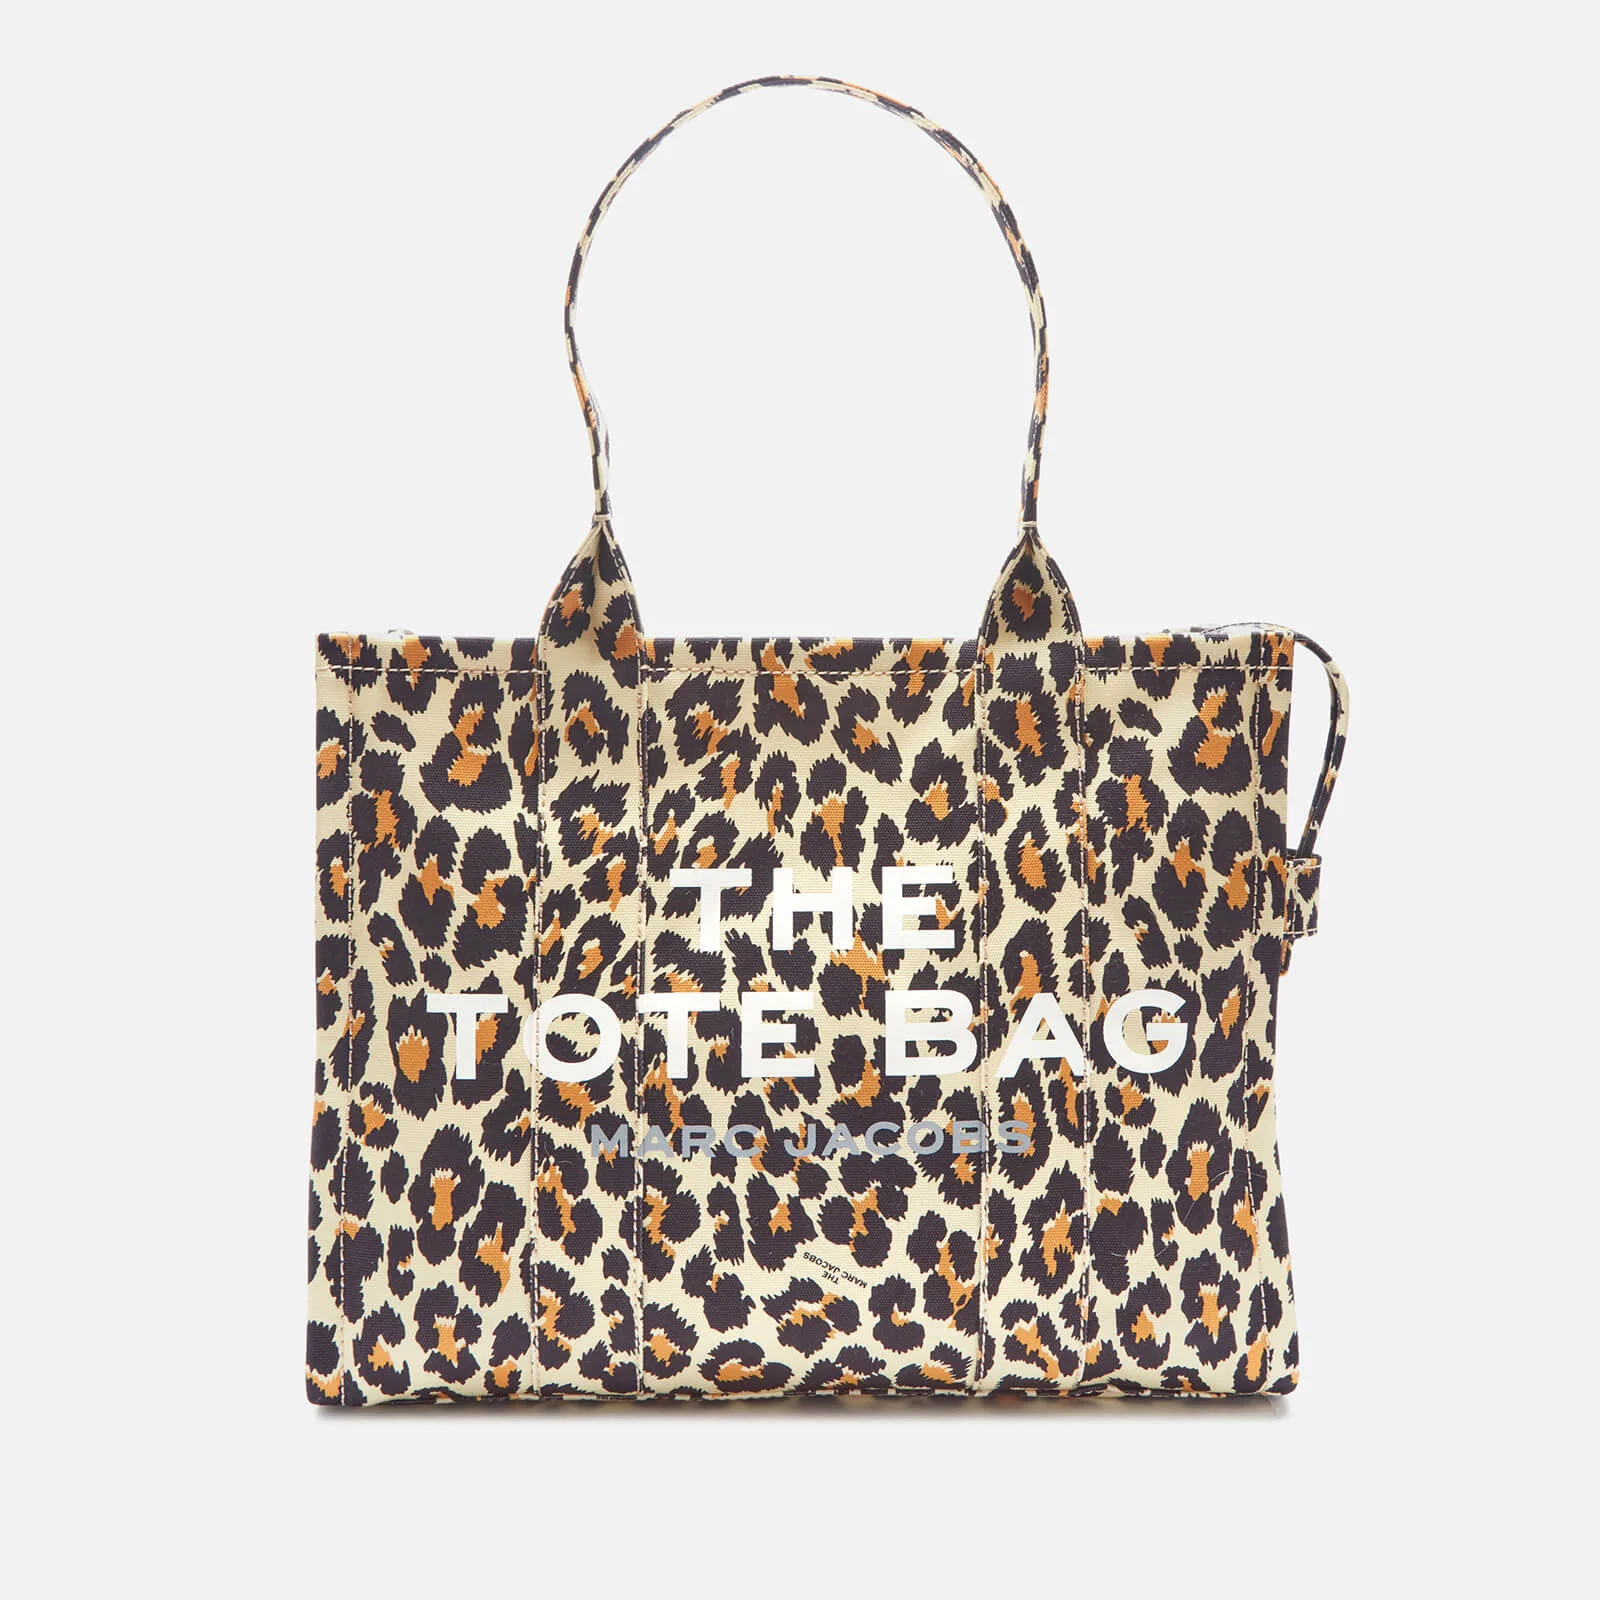 Marc Jacobs Women's Leopard Traveler Tote Bag - Natural Multi Image 1